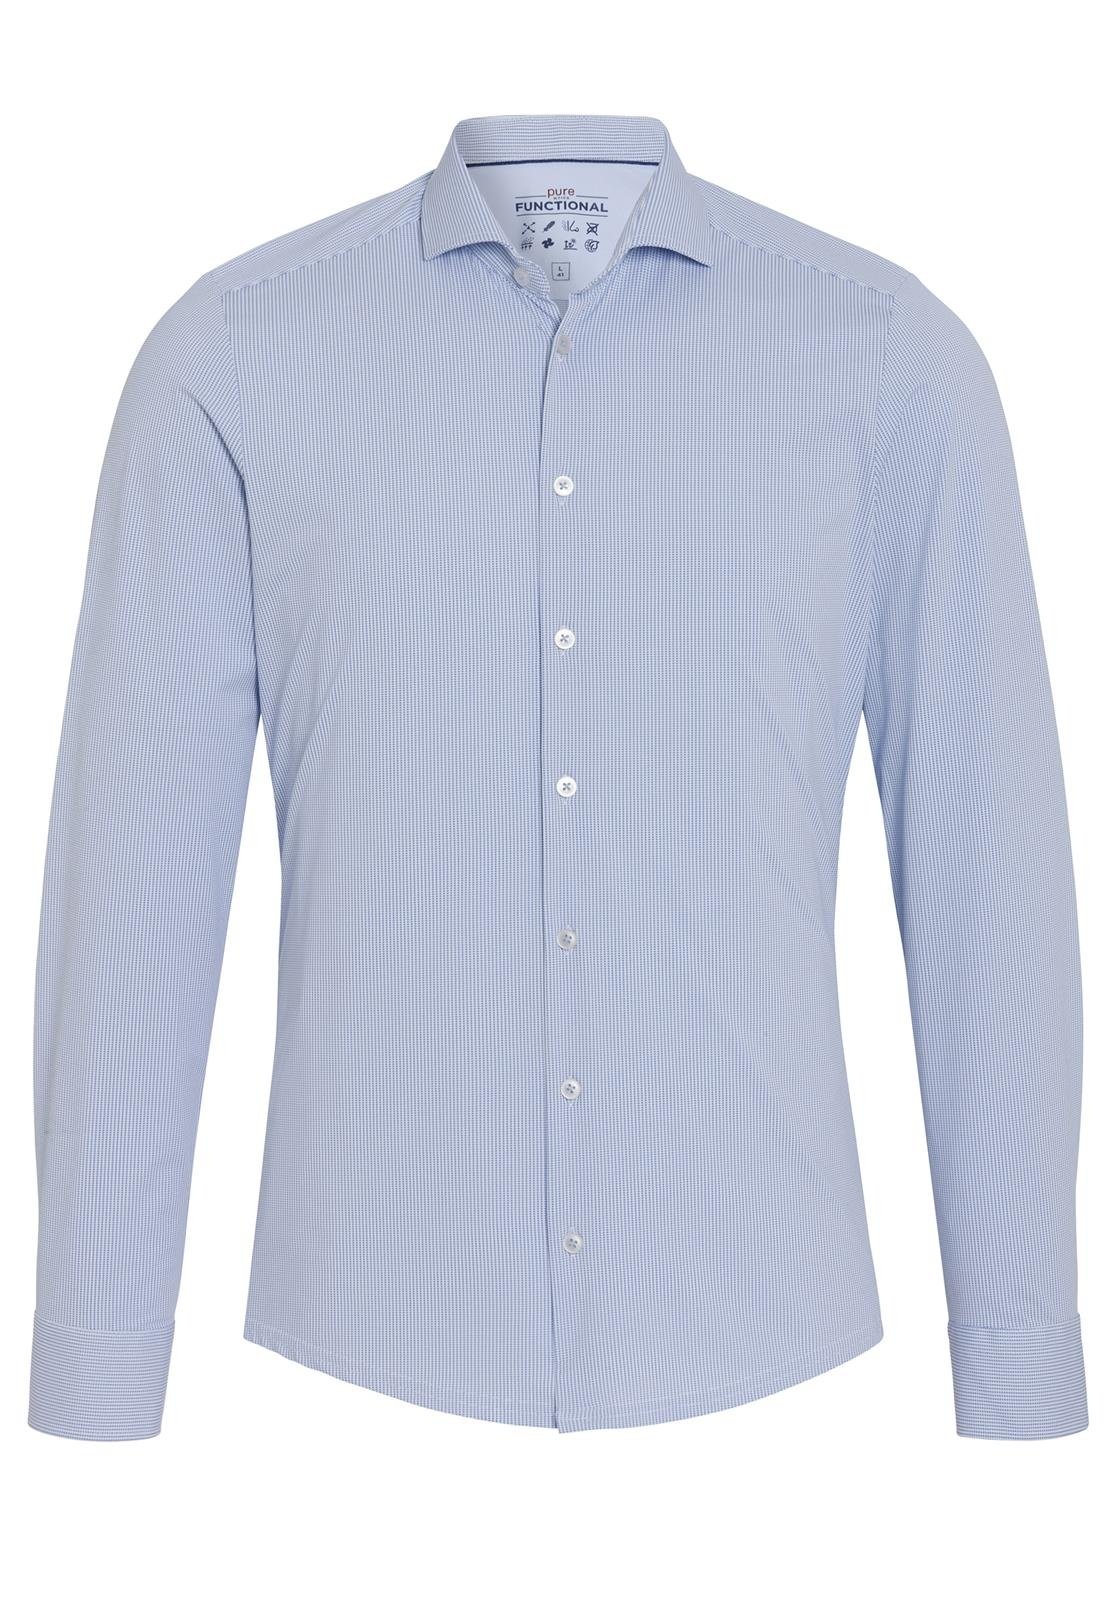 Pure Shirts Functional Lange Mouw Overhemd Jersey Print Blauw 